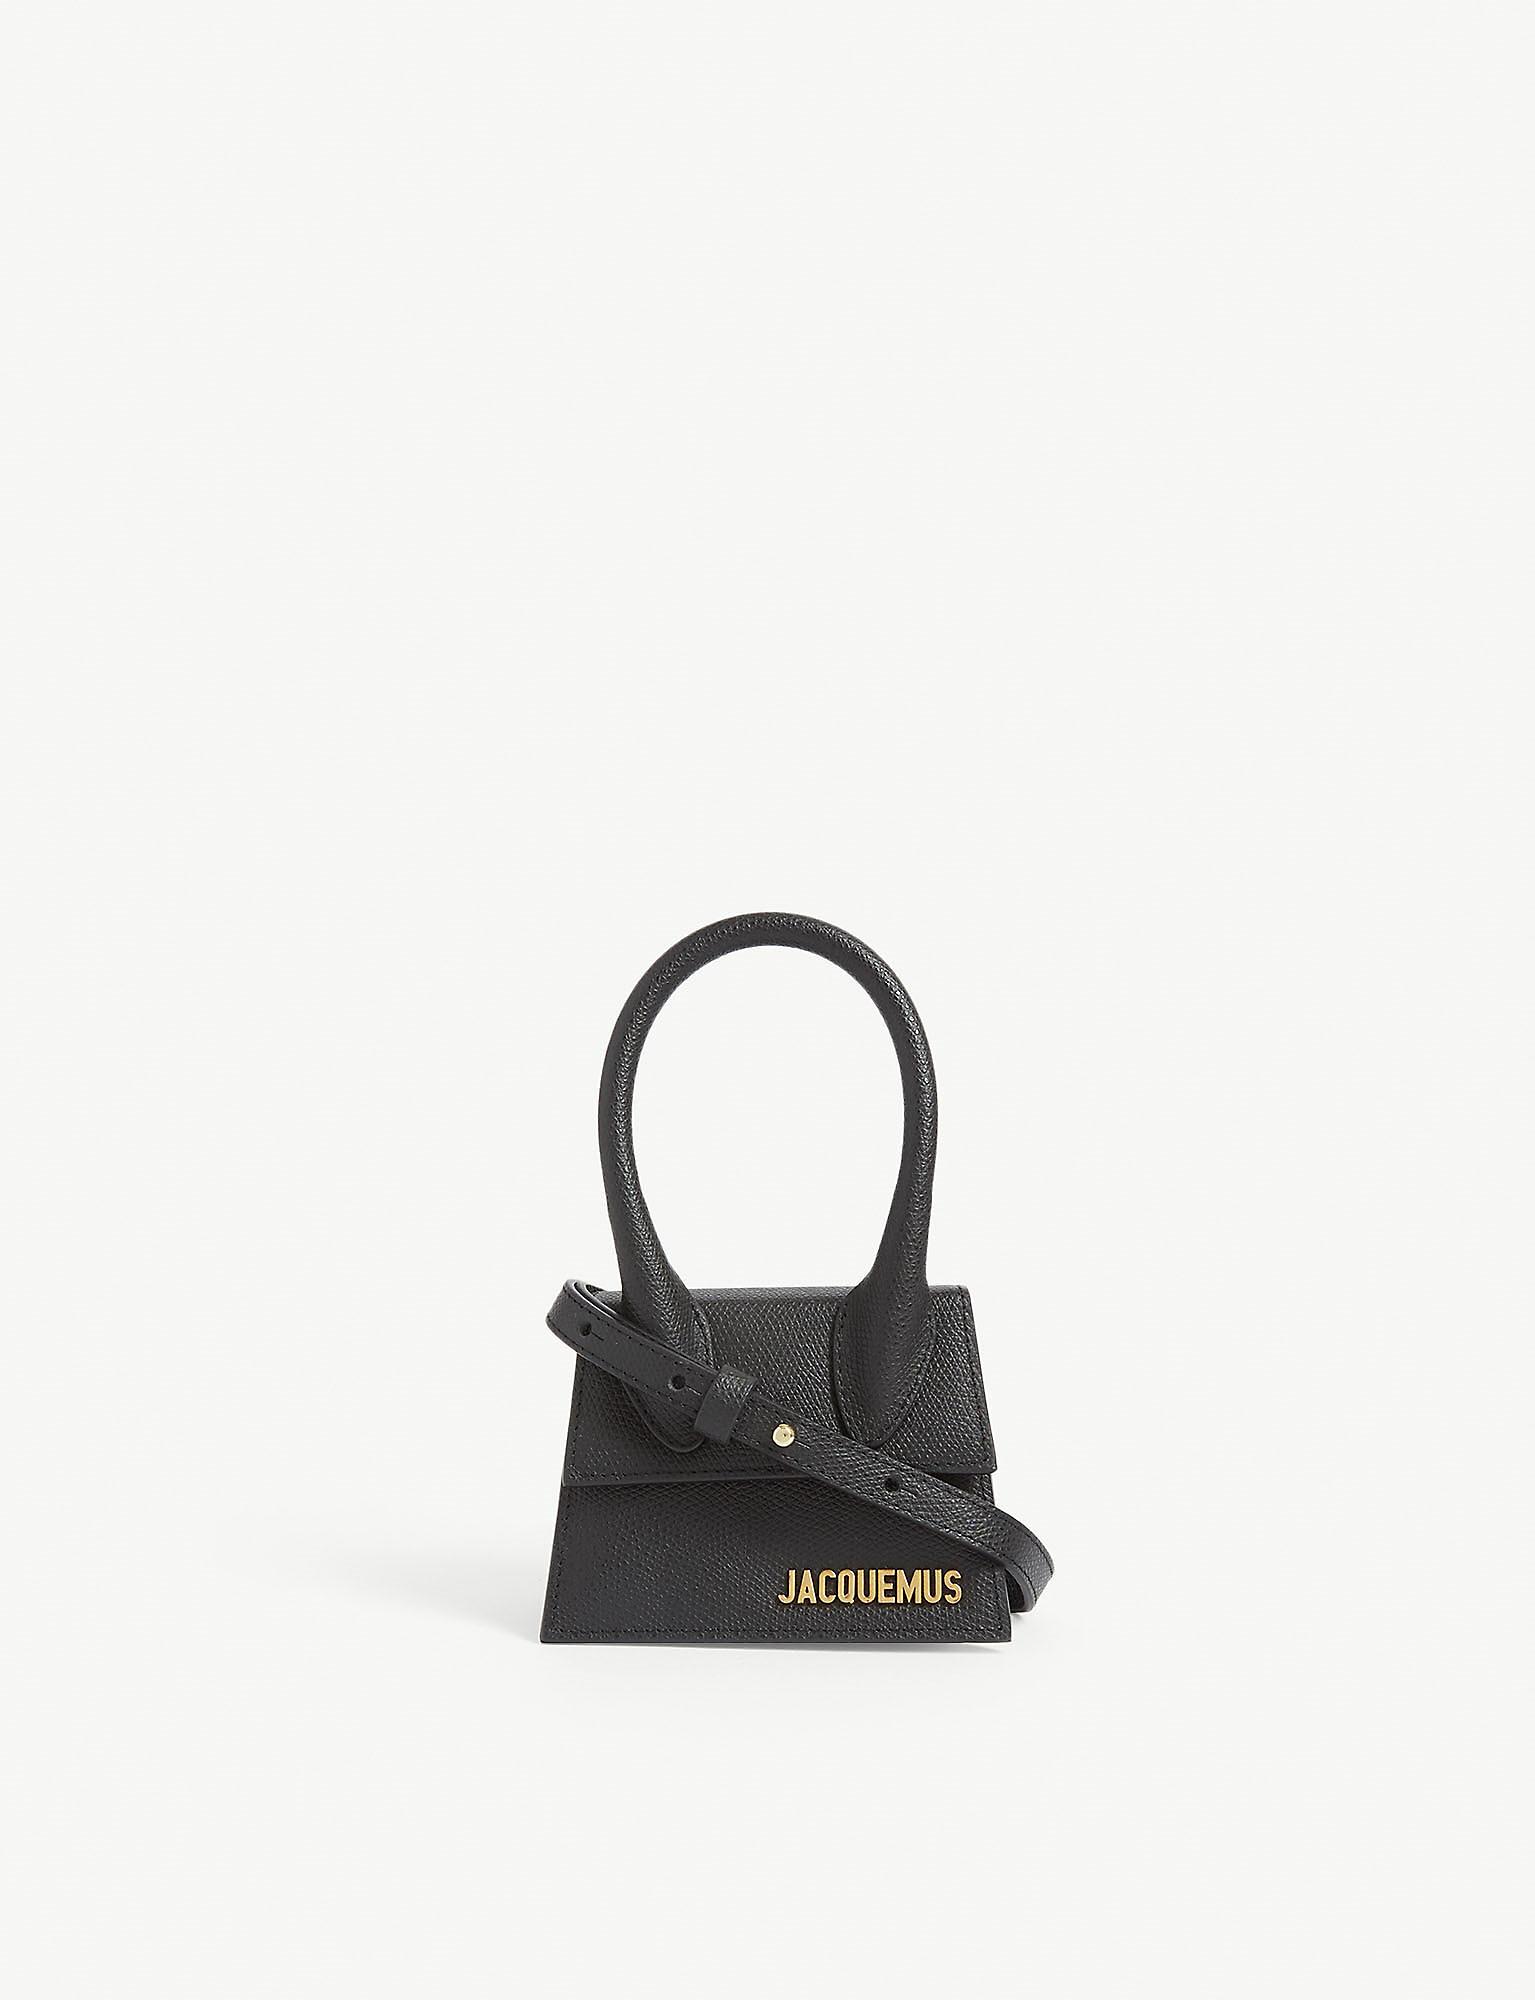 Jacquemus Le Chiquito Nœud Mini Bag